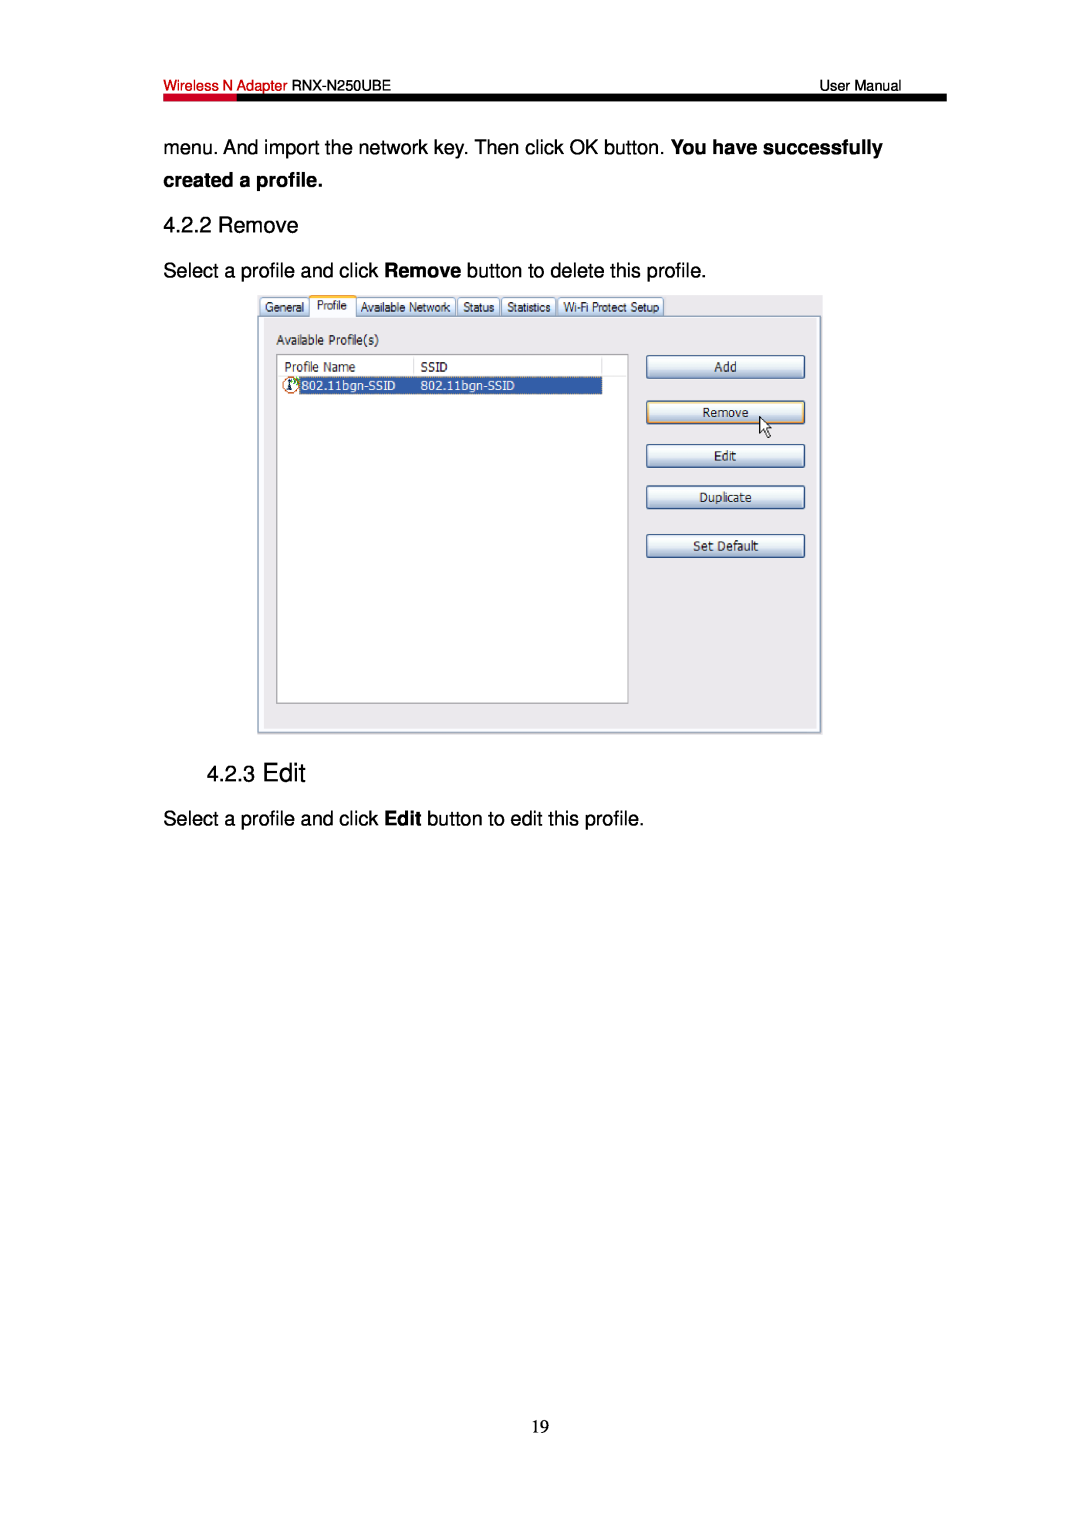 Rosewill user manual Edit, created a profile, Wireless N Adapter RNX-N250UBE 